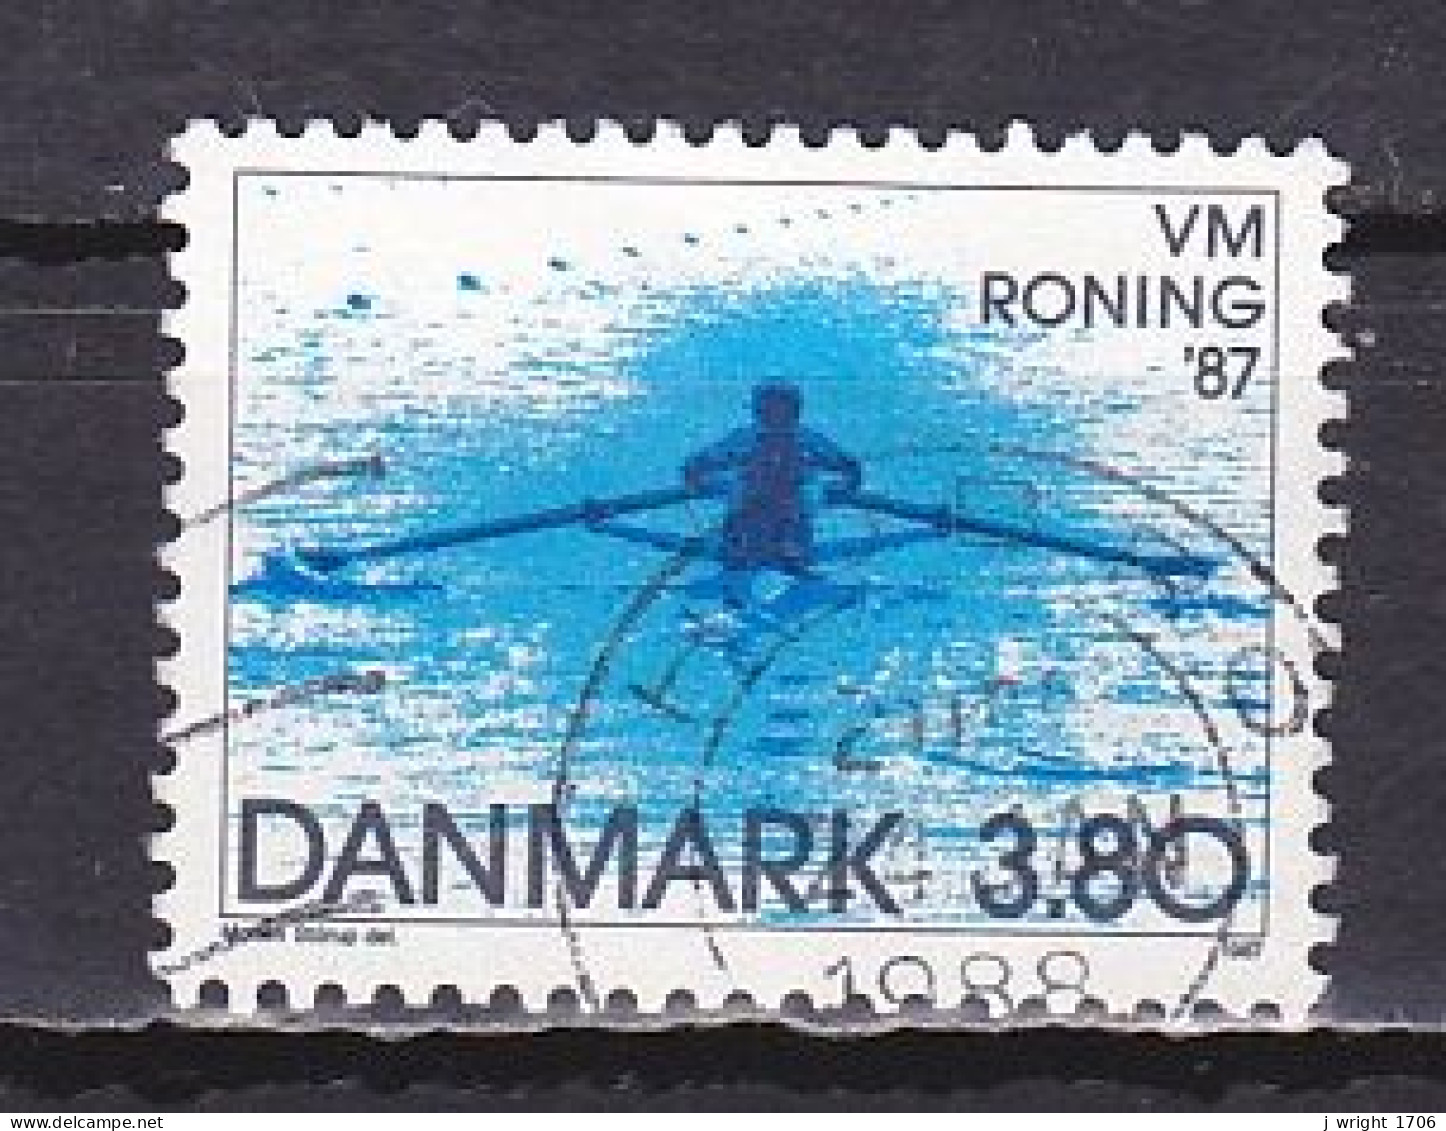 Denmark, 1987, World Rowing Championships, 3.80kr, USED - Gebraucht